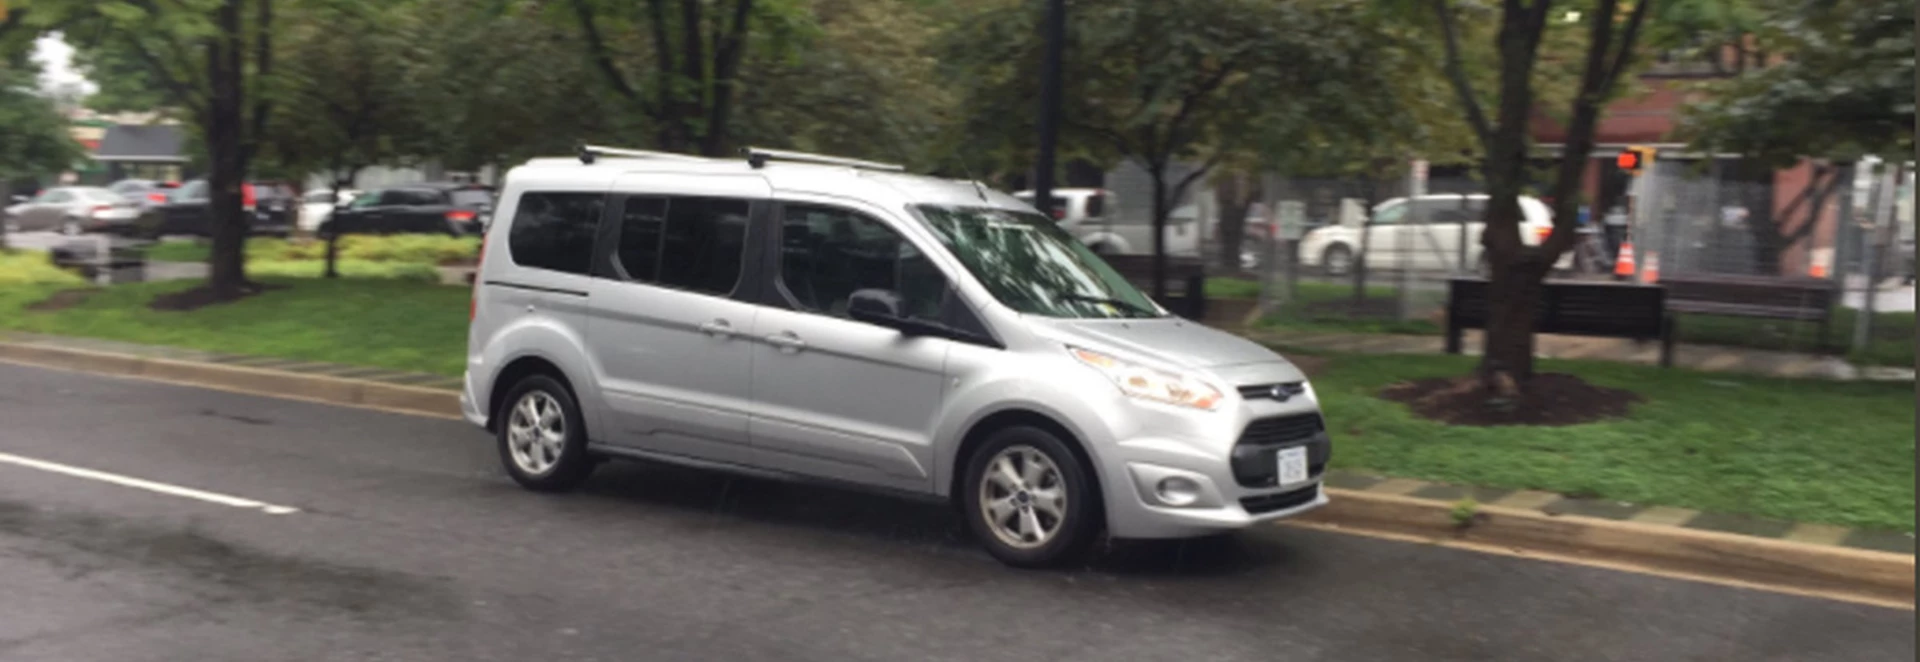 University Pranksters Fooled Virginia Residents with Autonomous Car 